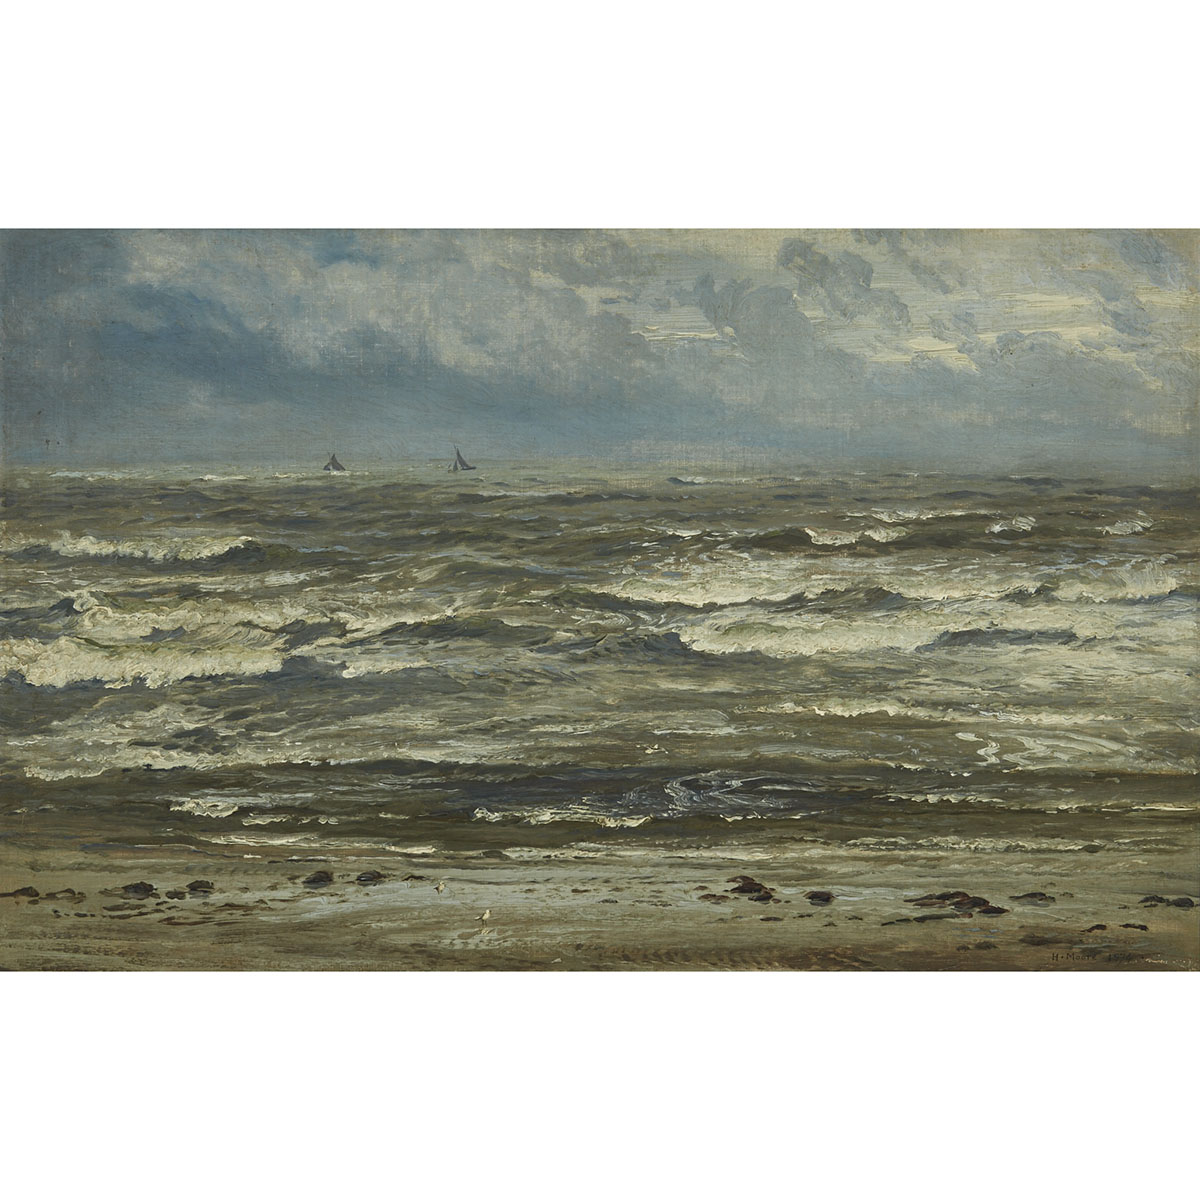 Henry Moore (1831-1895)